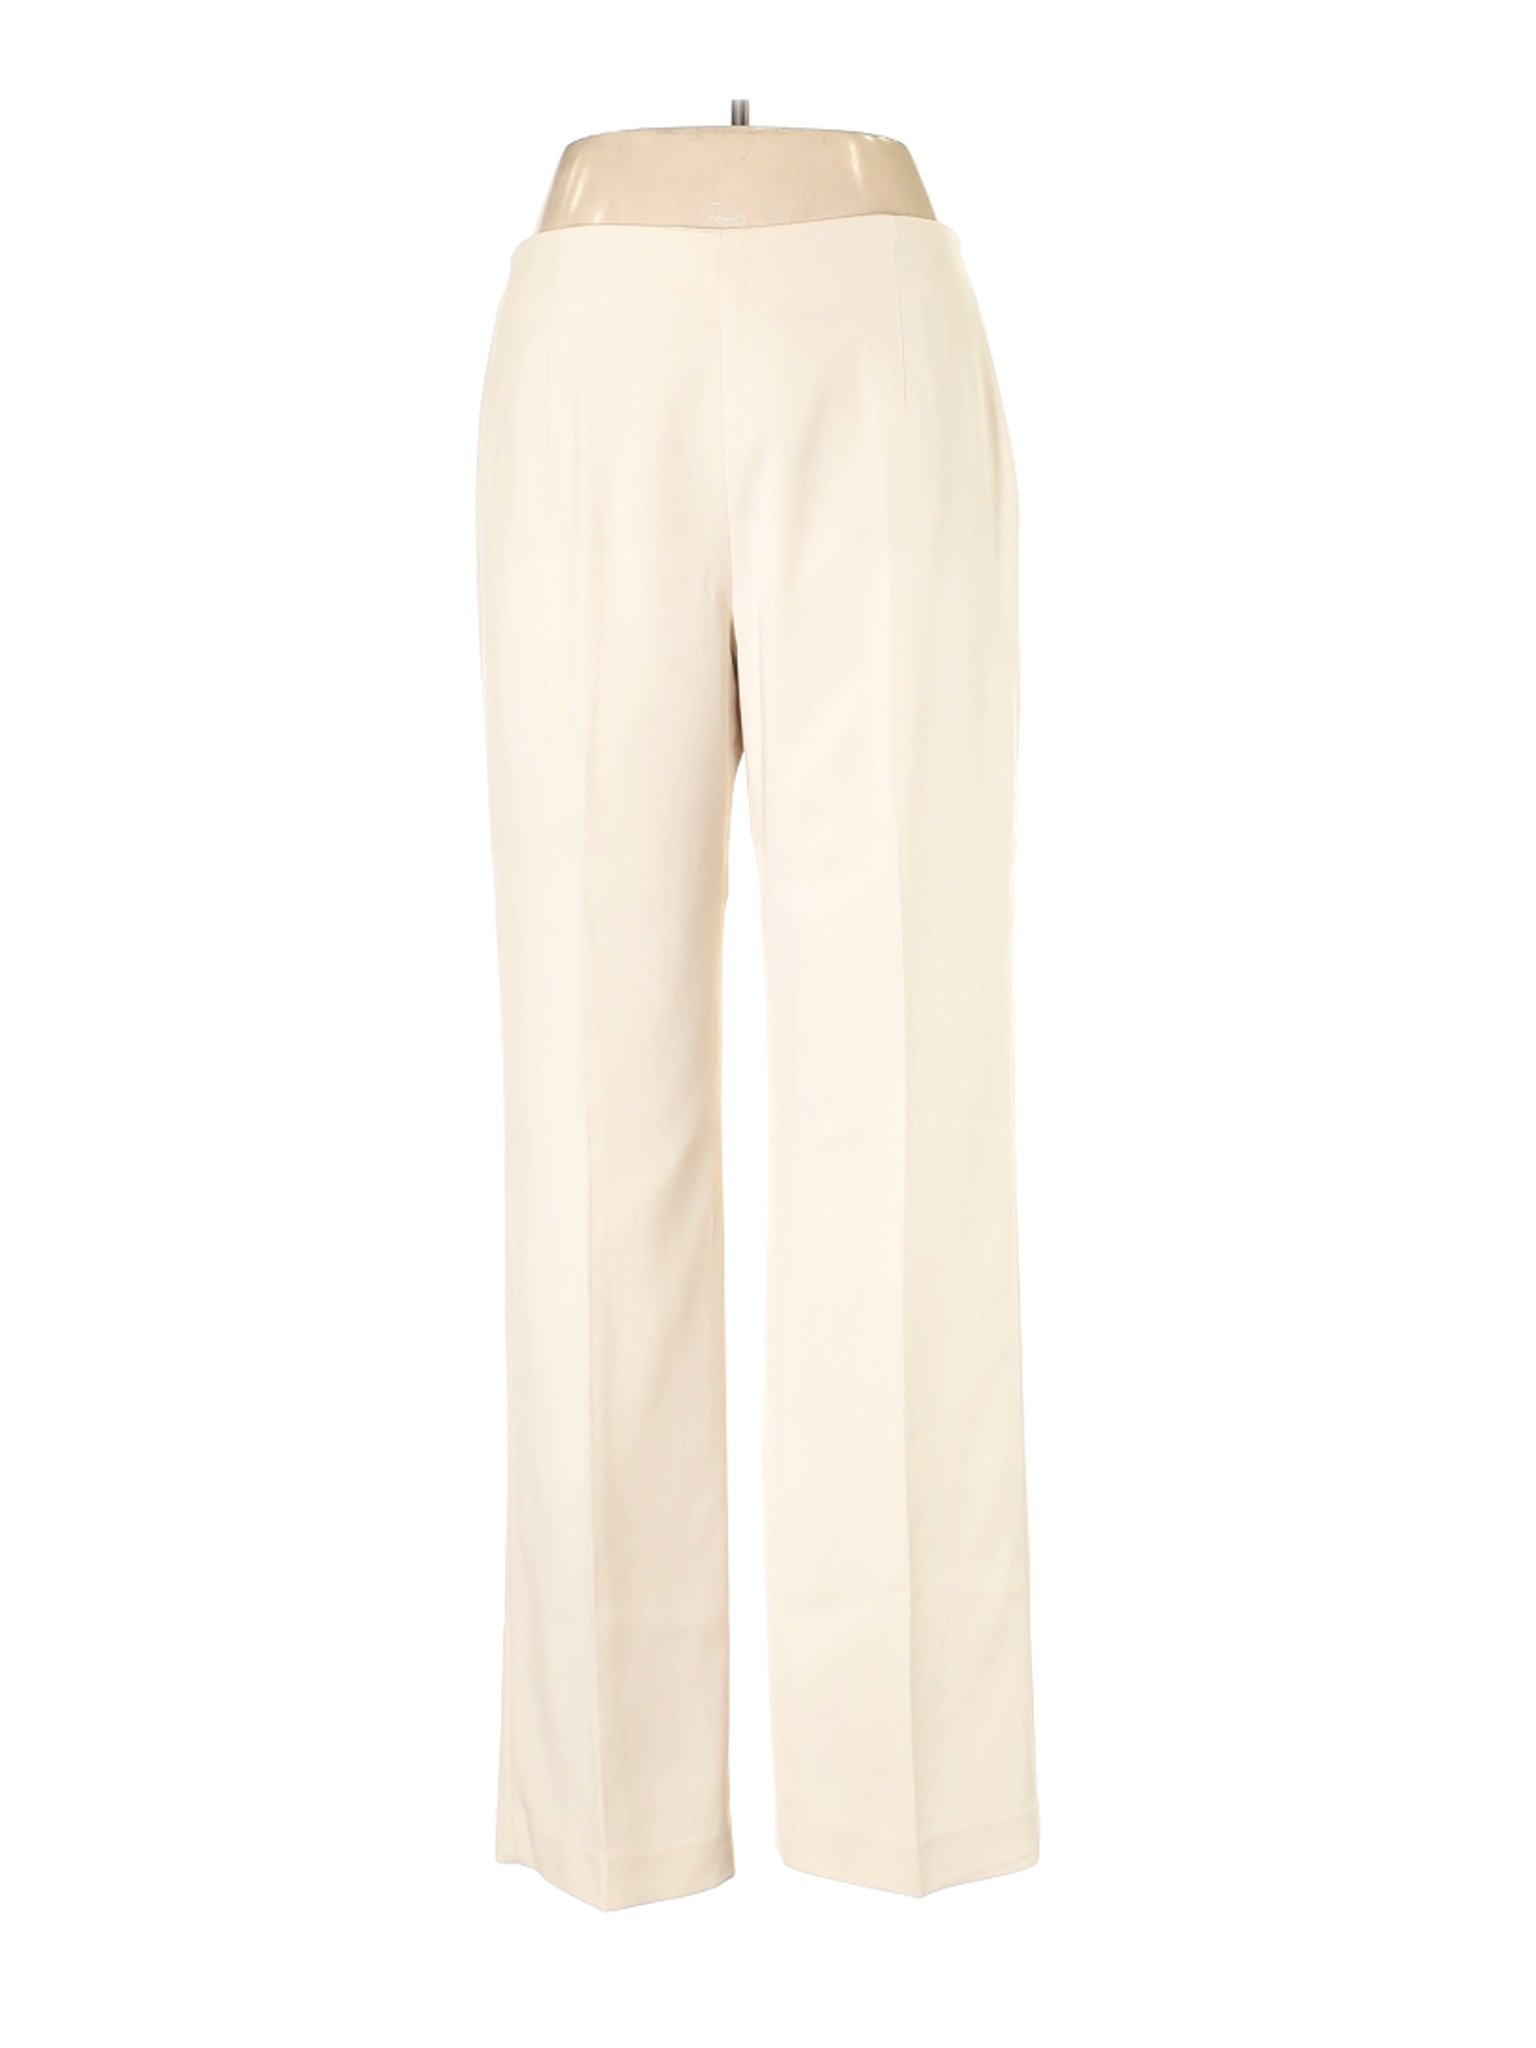 Assorted Brands Women Ivory Dress Pants 10 | eBay